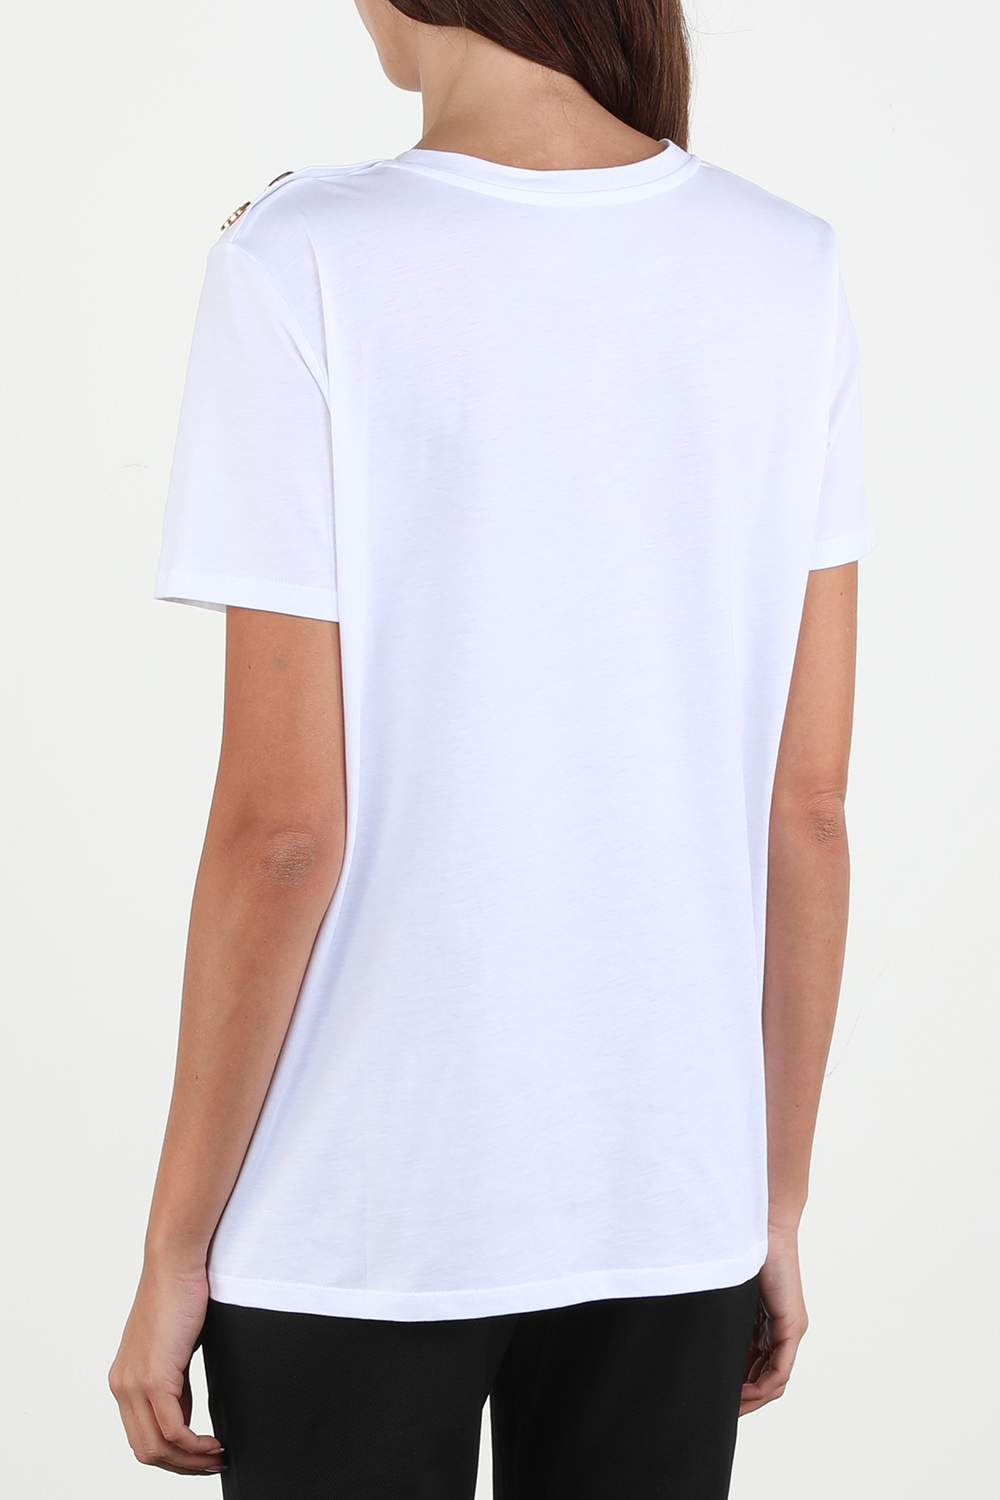 Balmain Slim Fit T-Shirt in White BALMAIN